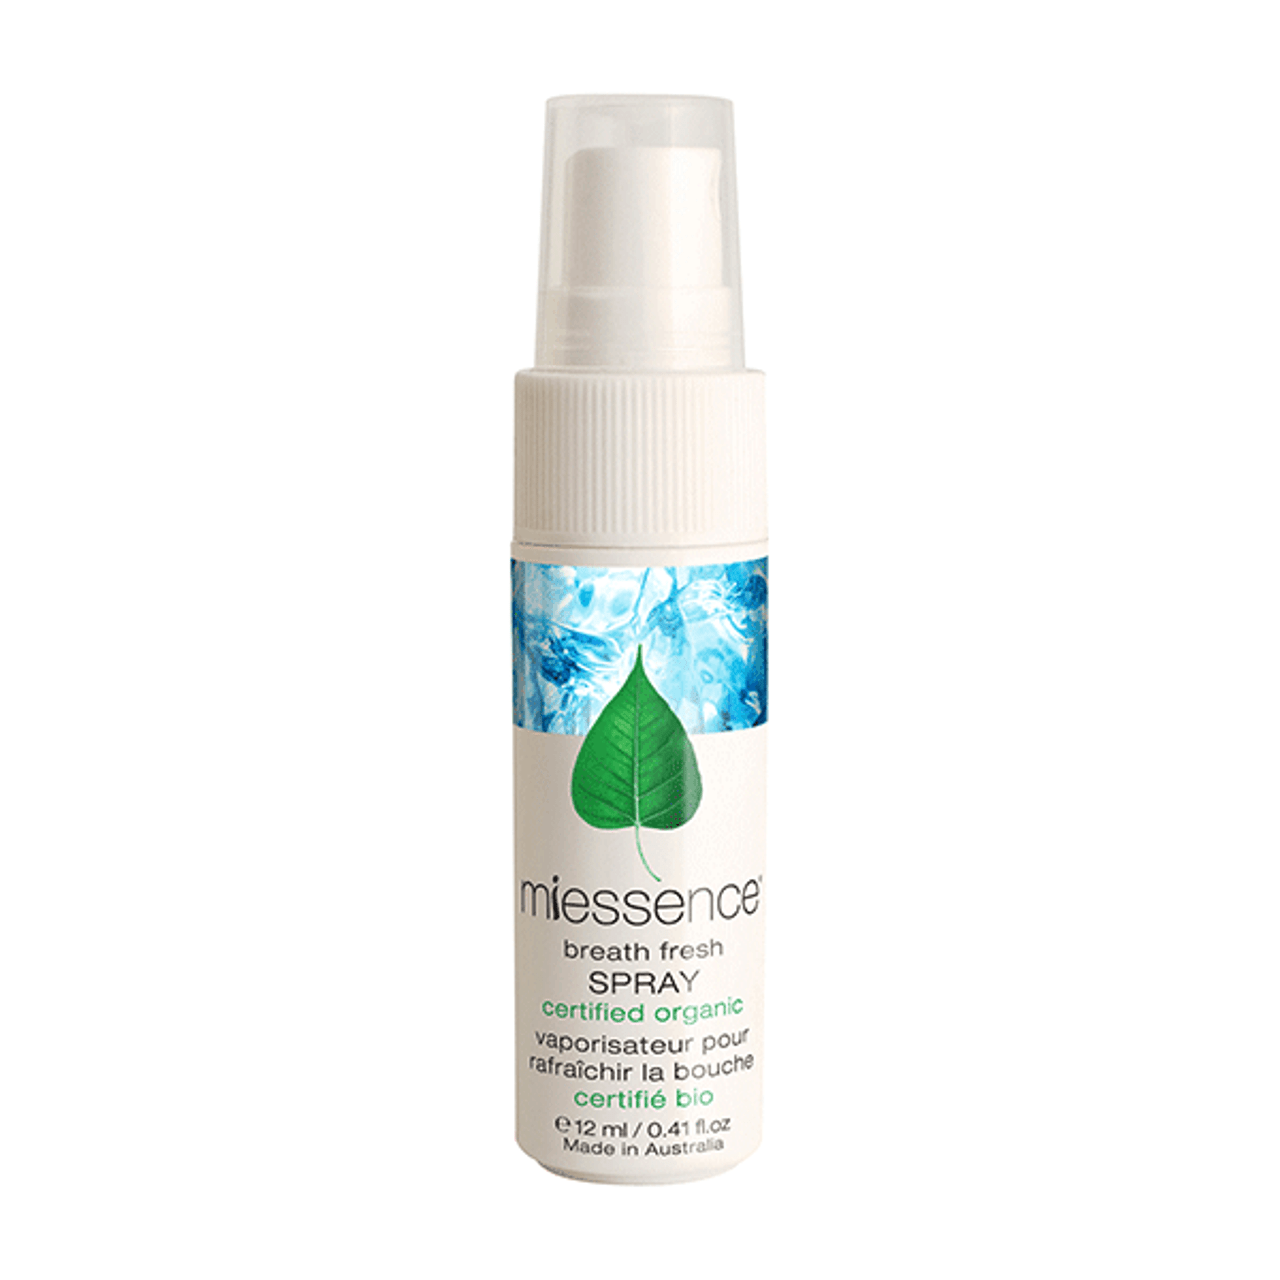 Miessence Certified Organics Breath Fresh Spray